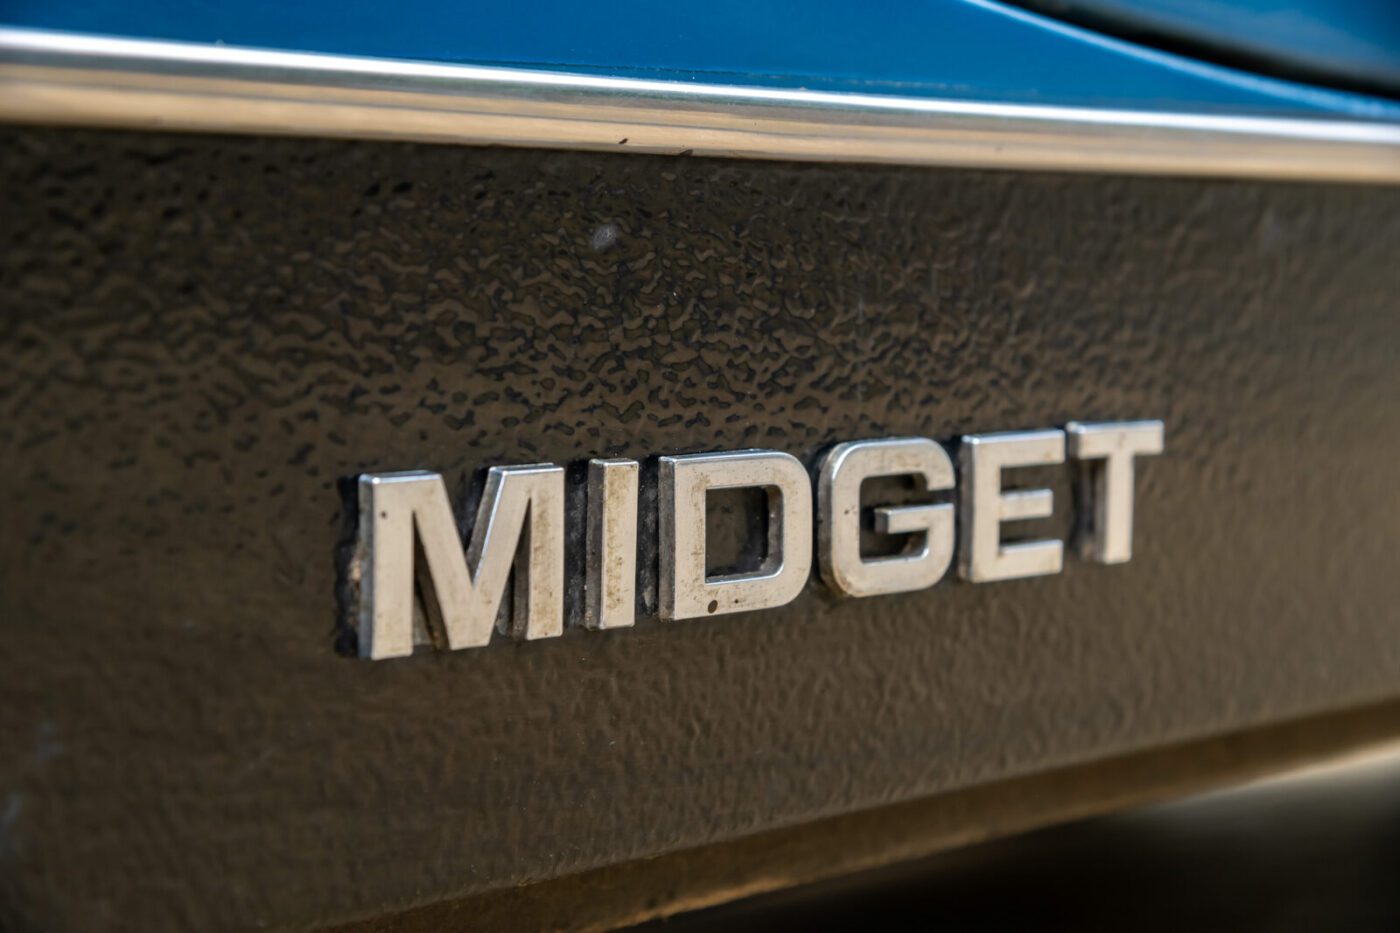 MG Midget sill badge